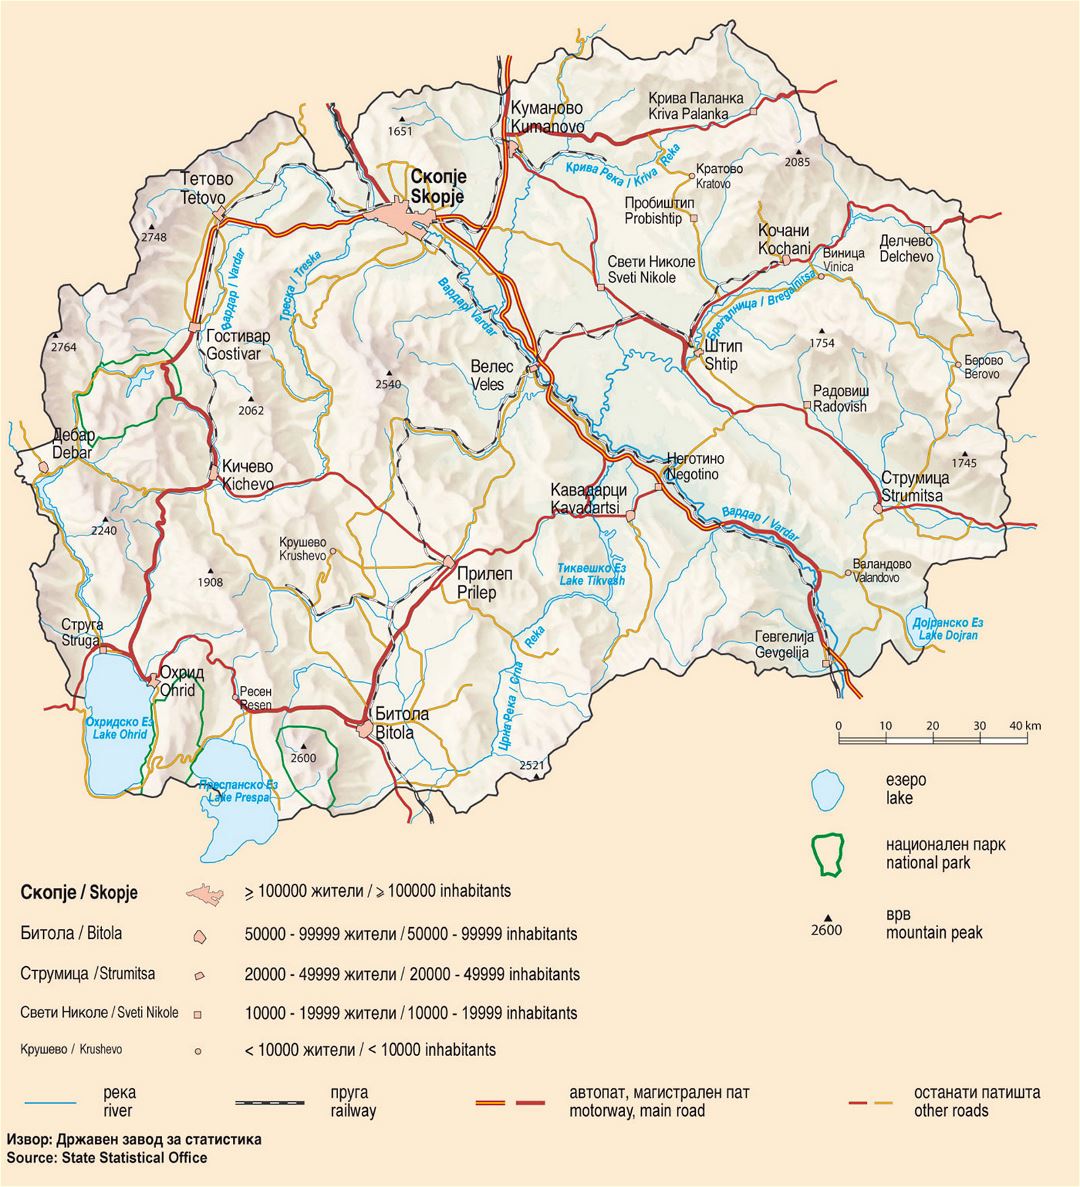 macedonia tourist map